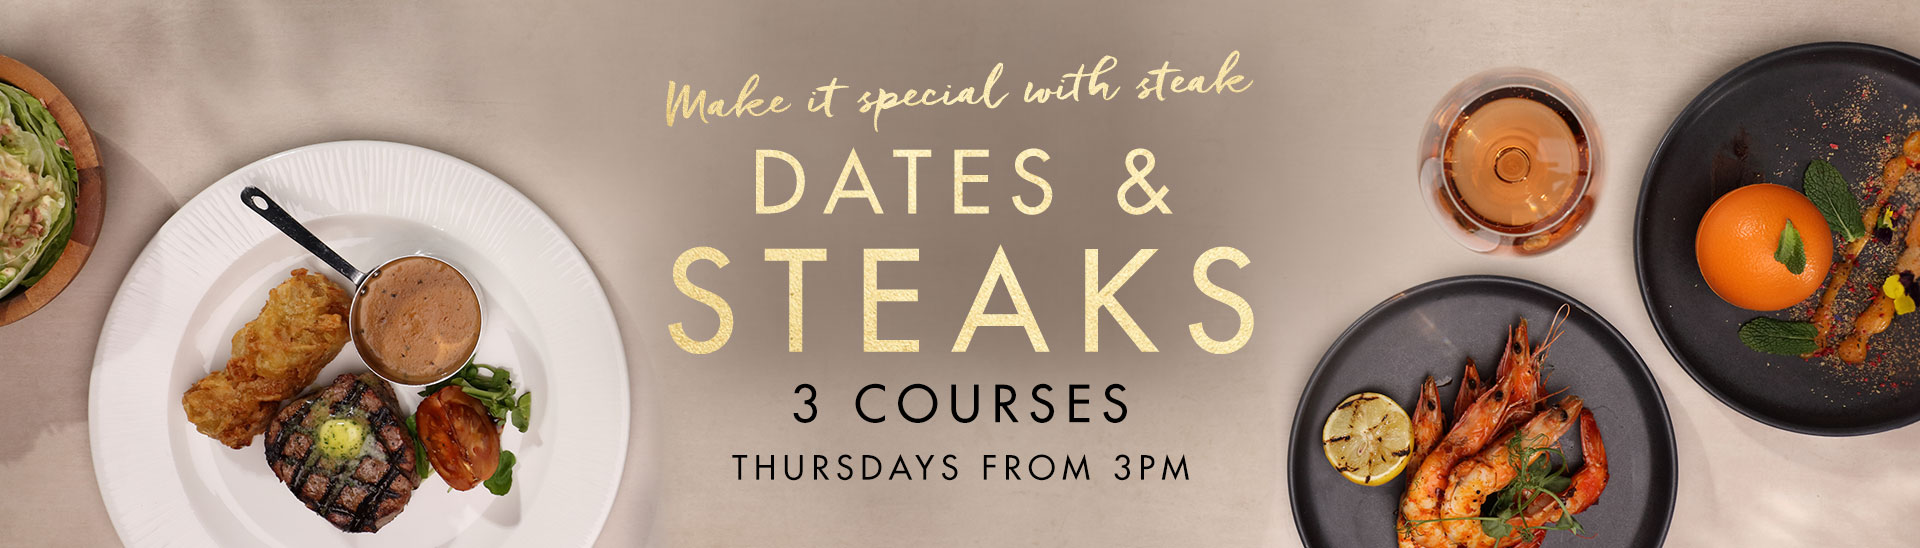 Dates & Steaks at Miller & Carter Chelmsford